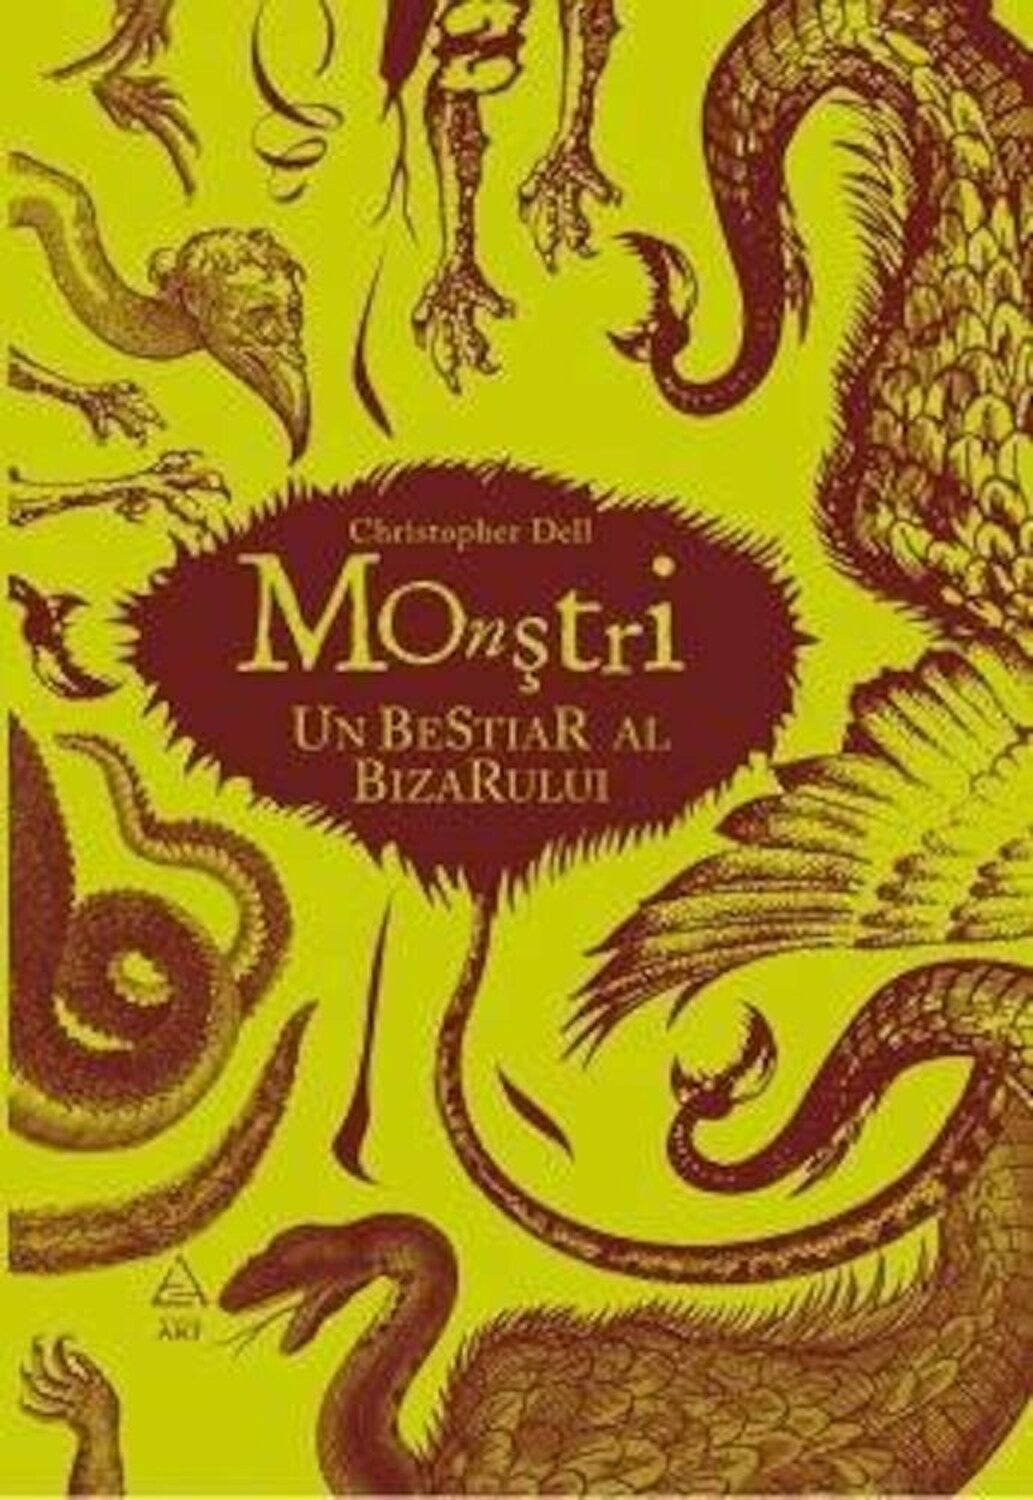 Monstri. Un bestiar al bizarului | Cristopher Dell ART poza bestsellers.ro